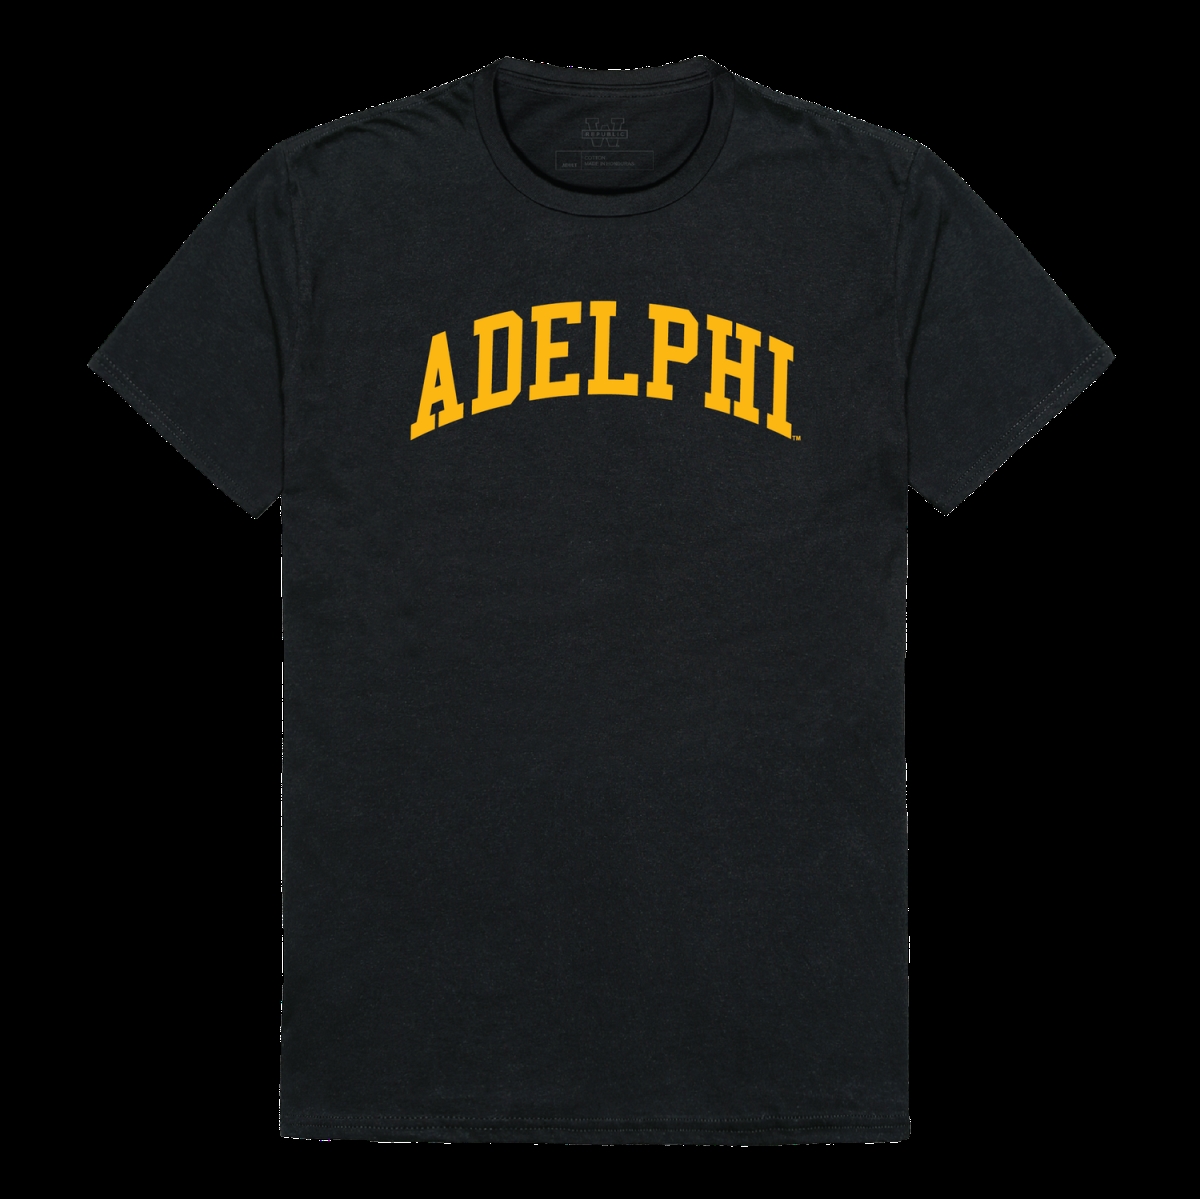 W Republic 537-733-BLK-01 Adelphi University Panthers College T-Shirt&#44; Black - Small